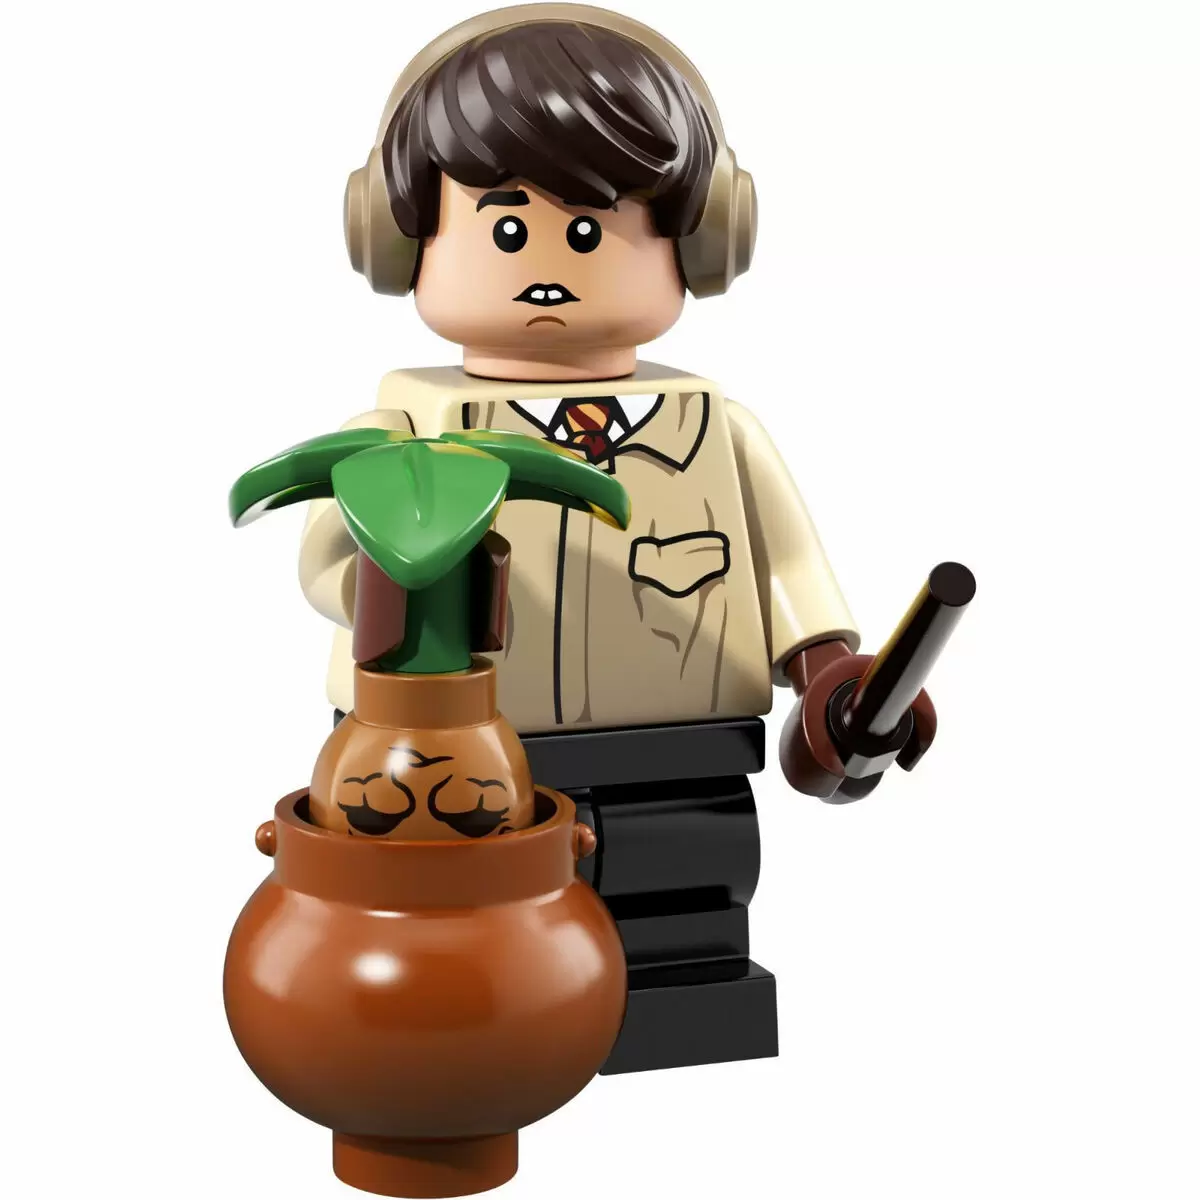 LEGO Minifigures : Wizarding World of Harry Potter - Neville Longbottom (Neville Londubat)